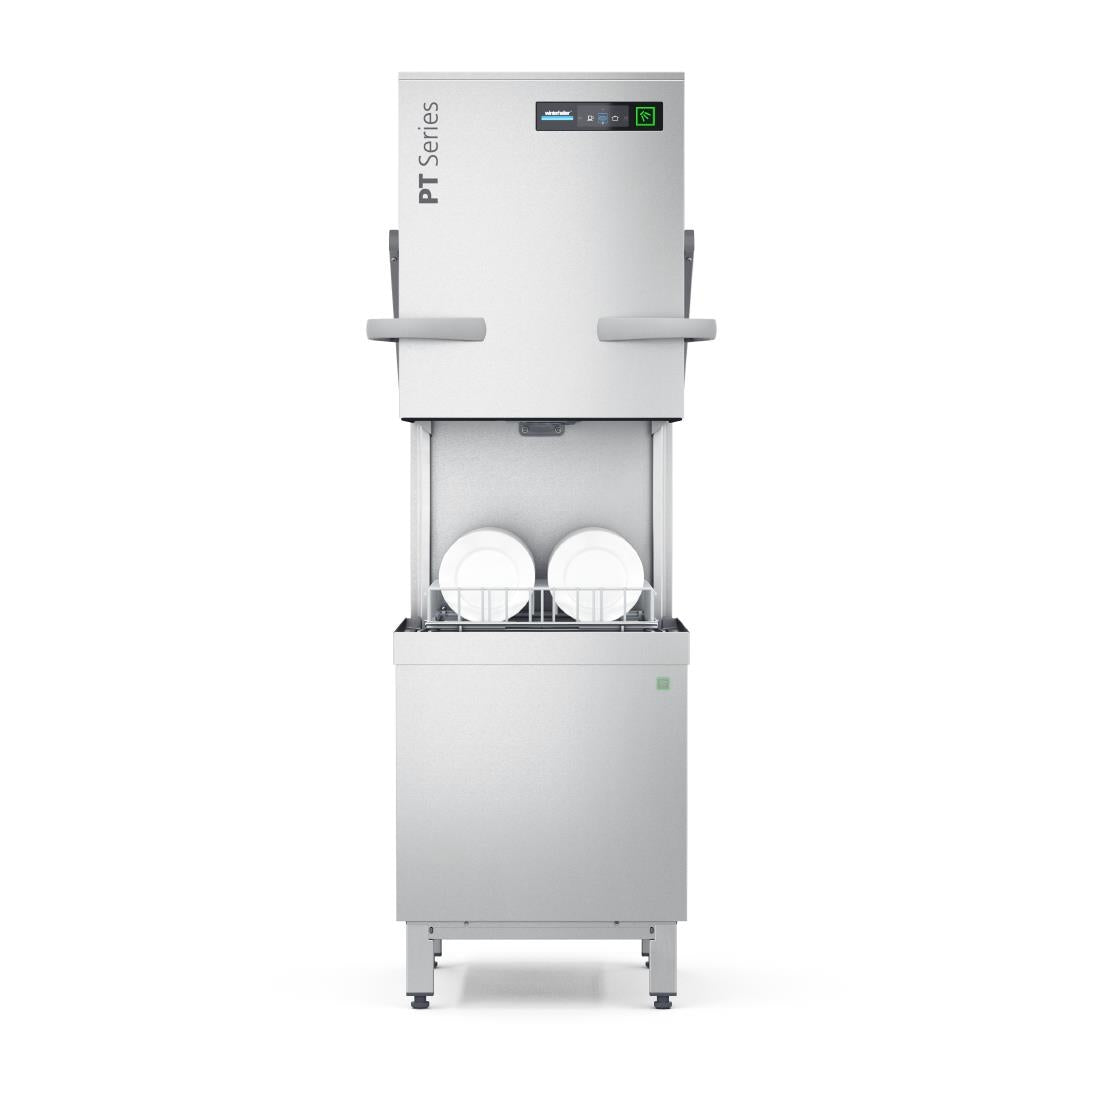 FT520 Winterhalter Pass Through Dishwasher PT-M JD Catering Equipment Solutions Ltd